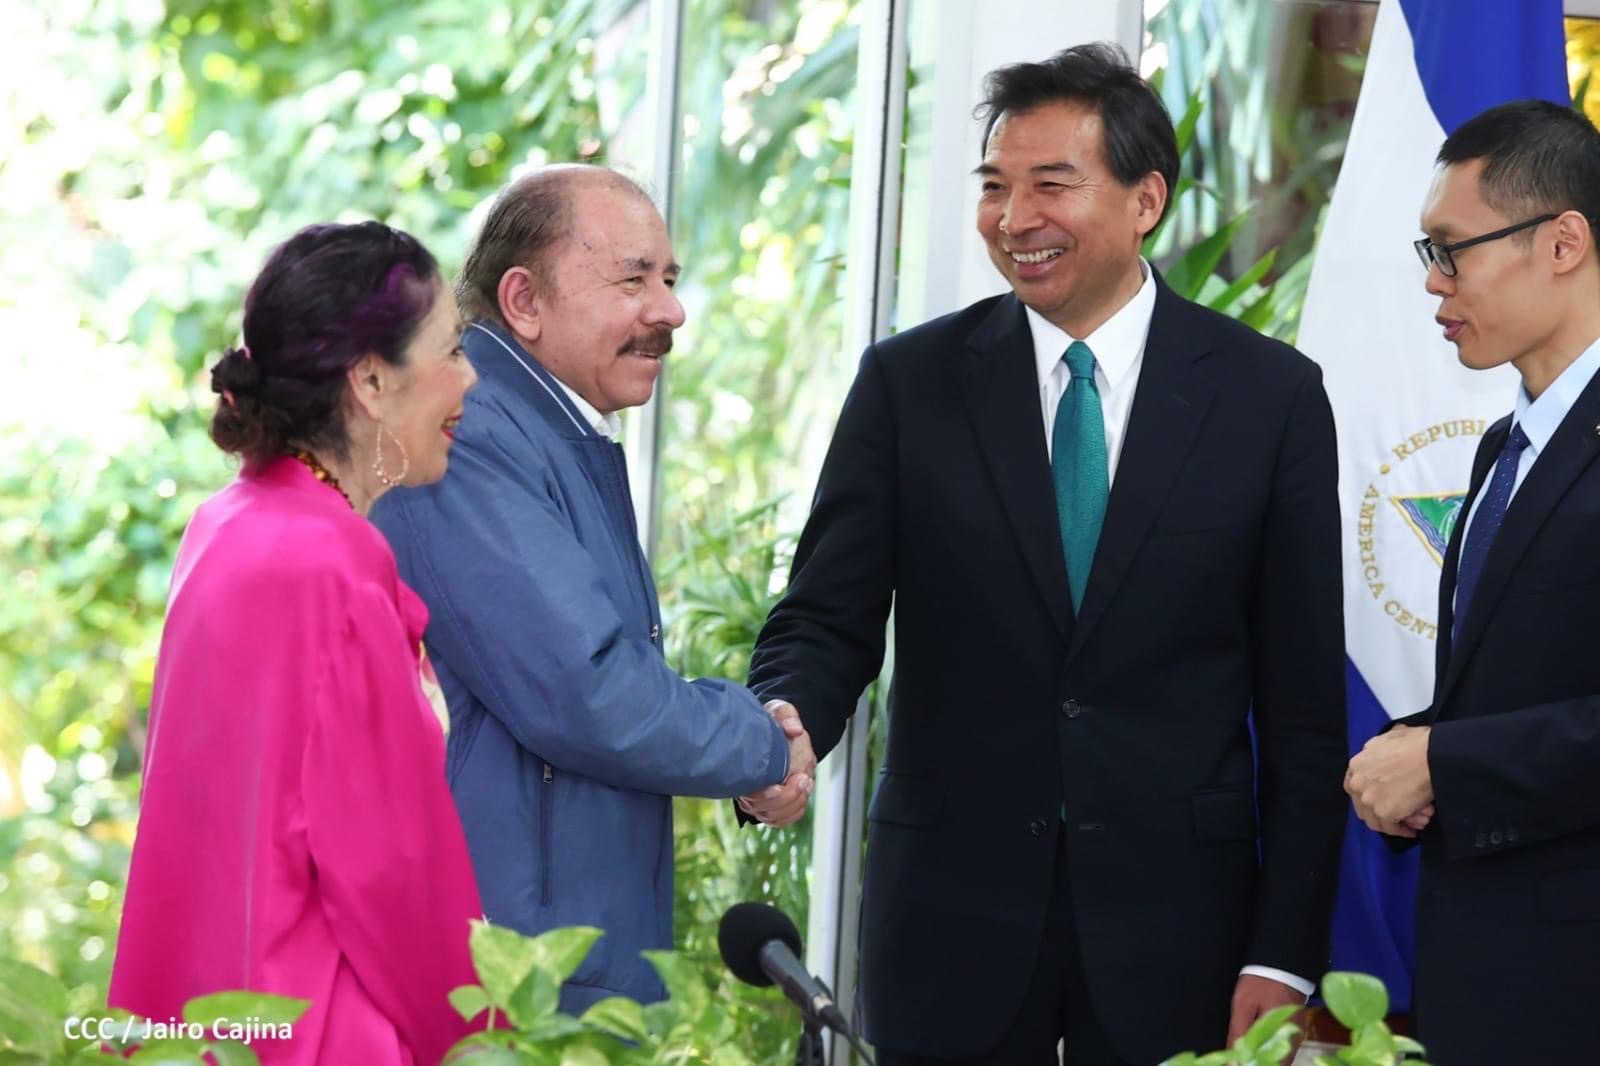 Daniel Ortega met with Luo Zhaohui